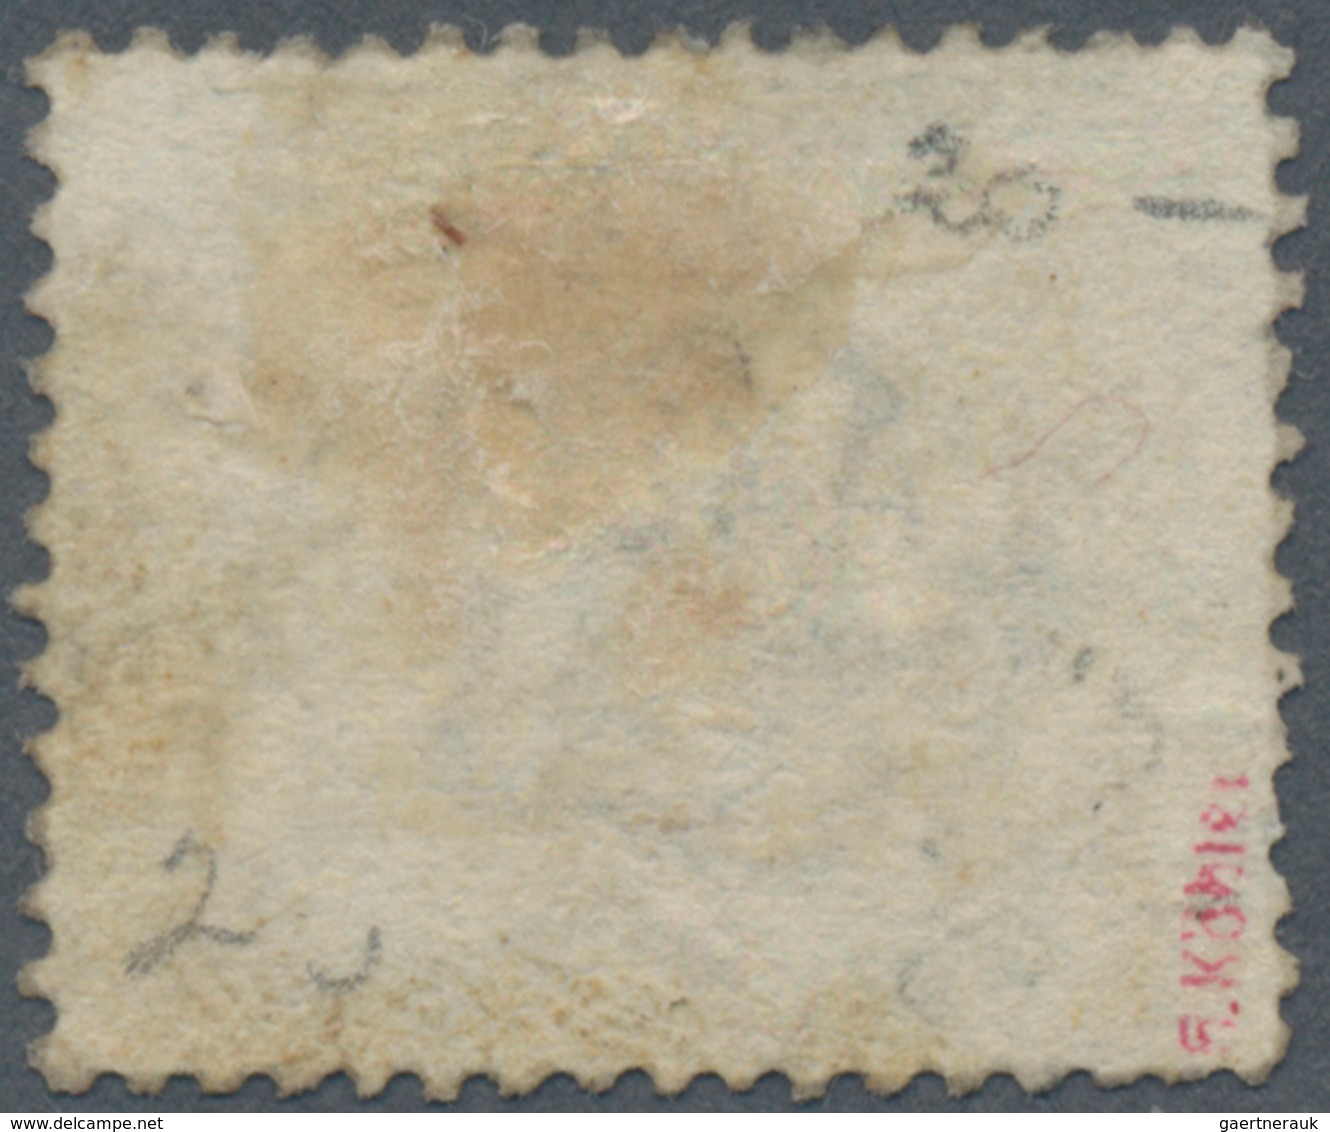 Großbritannien - Dienstmarken: 1886, Govt.Parcels, QV 6d. Dull Green, Relatively Fresh Colour, Fine - Officials